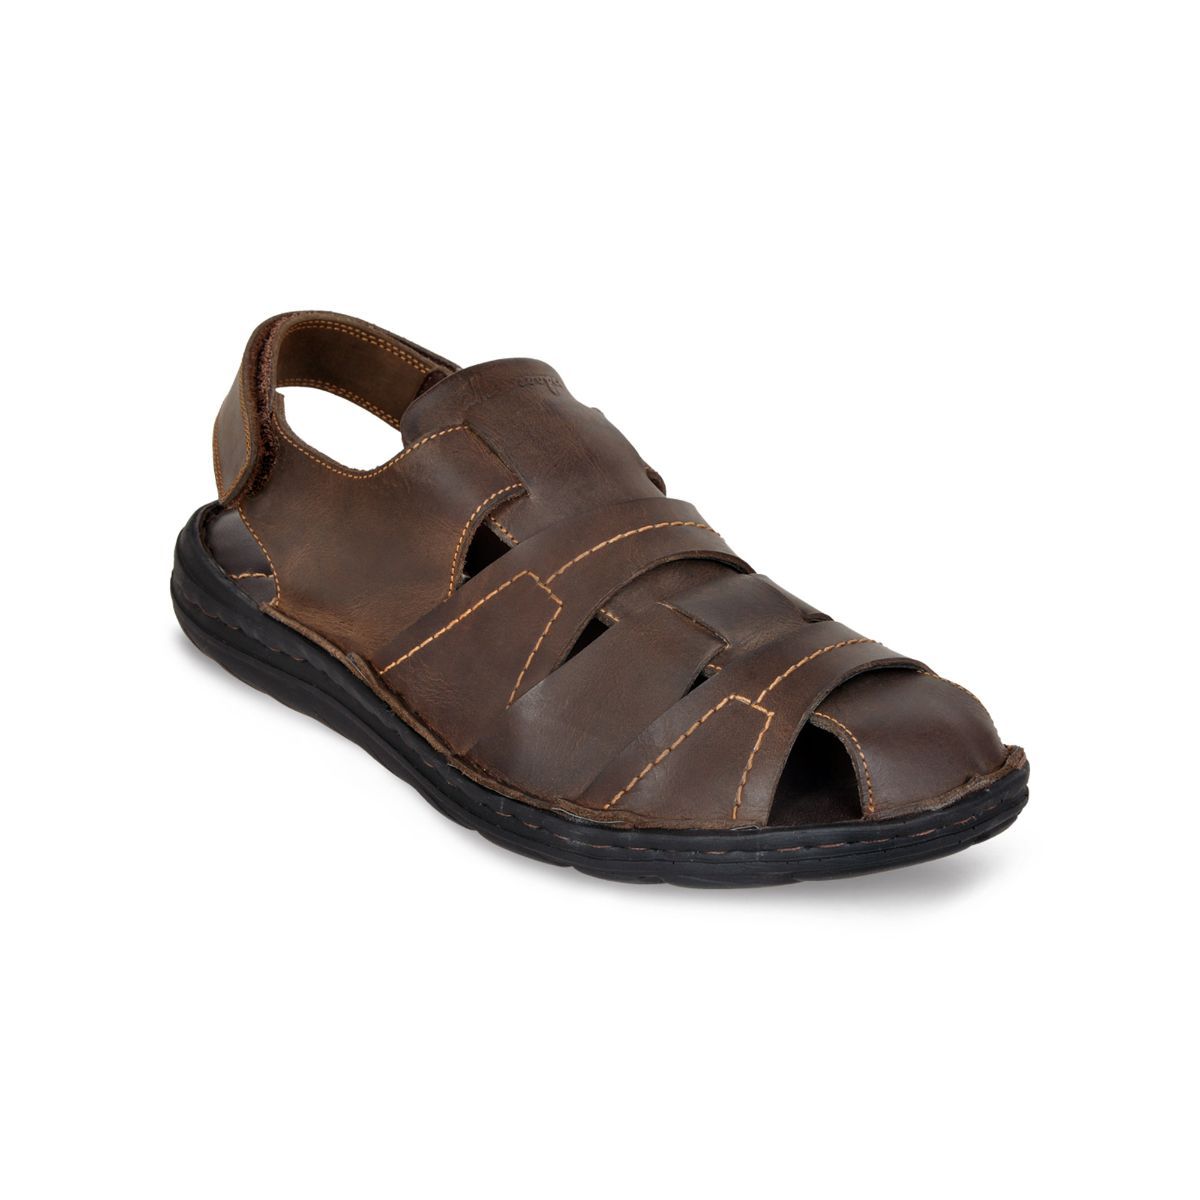 Allen Cooper Brown Leather Sandals - 7